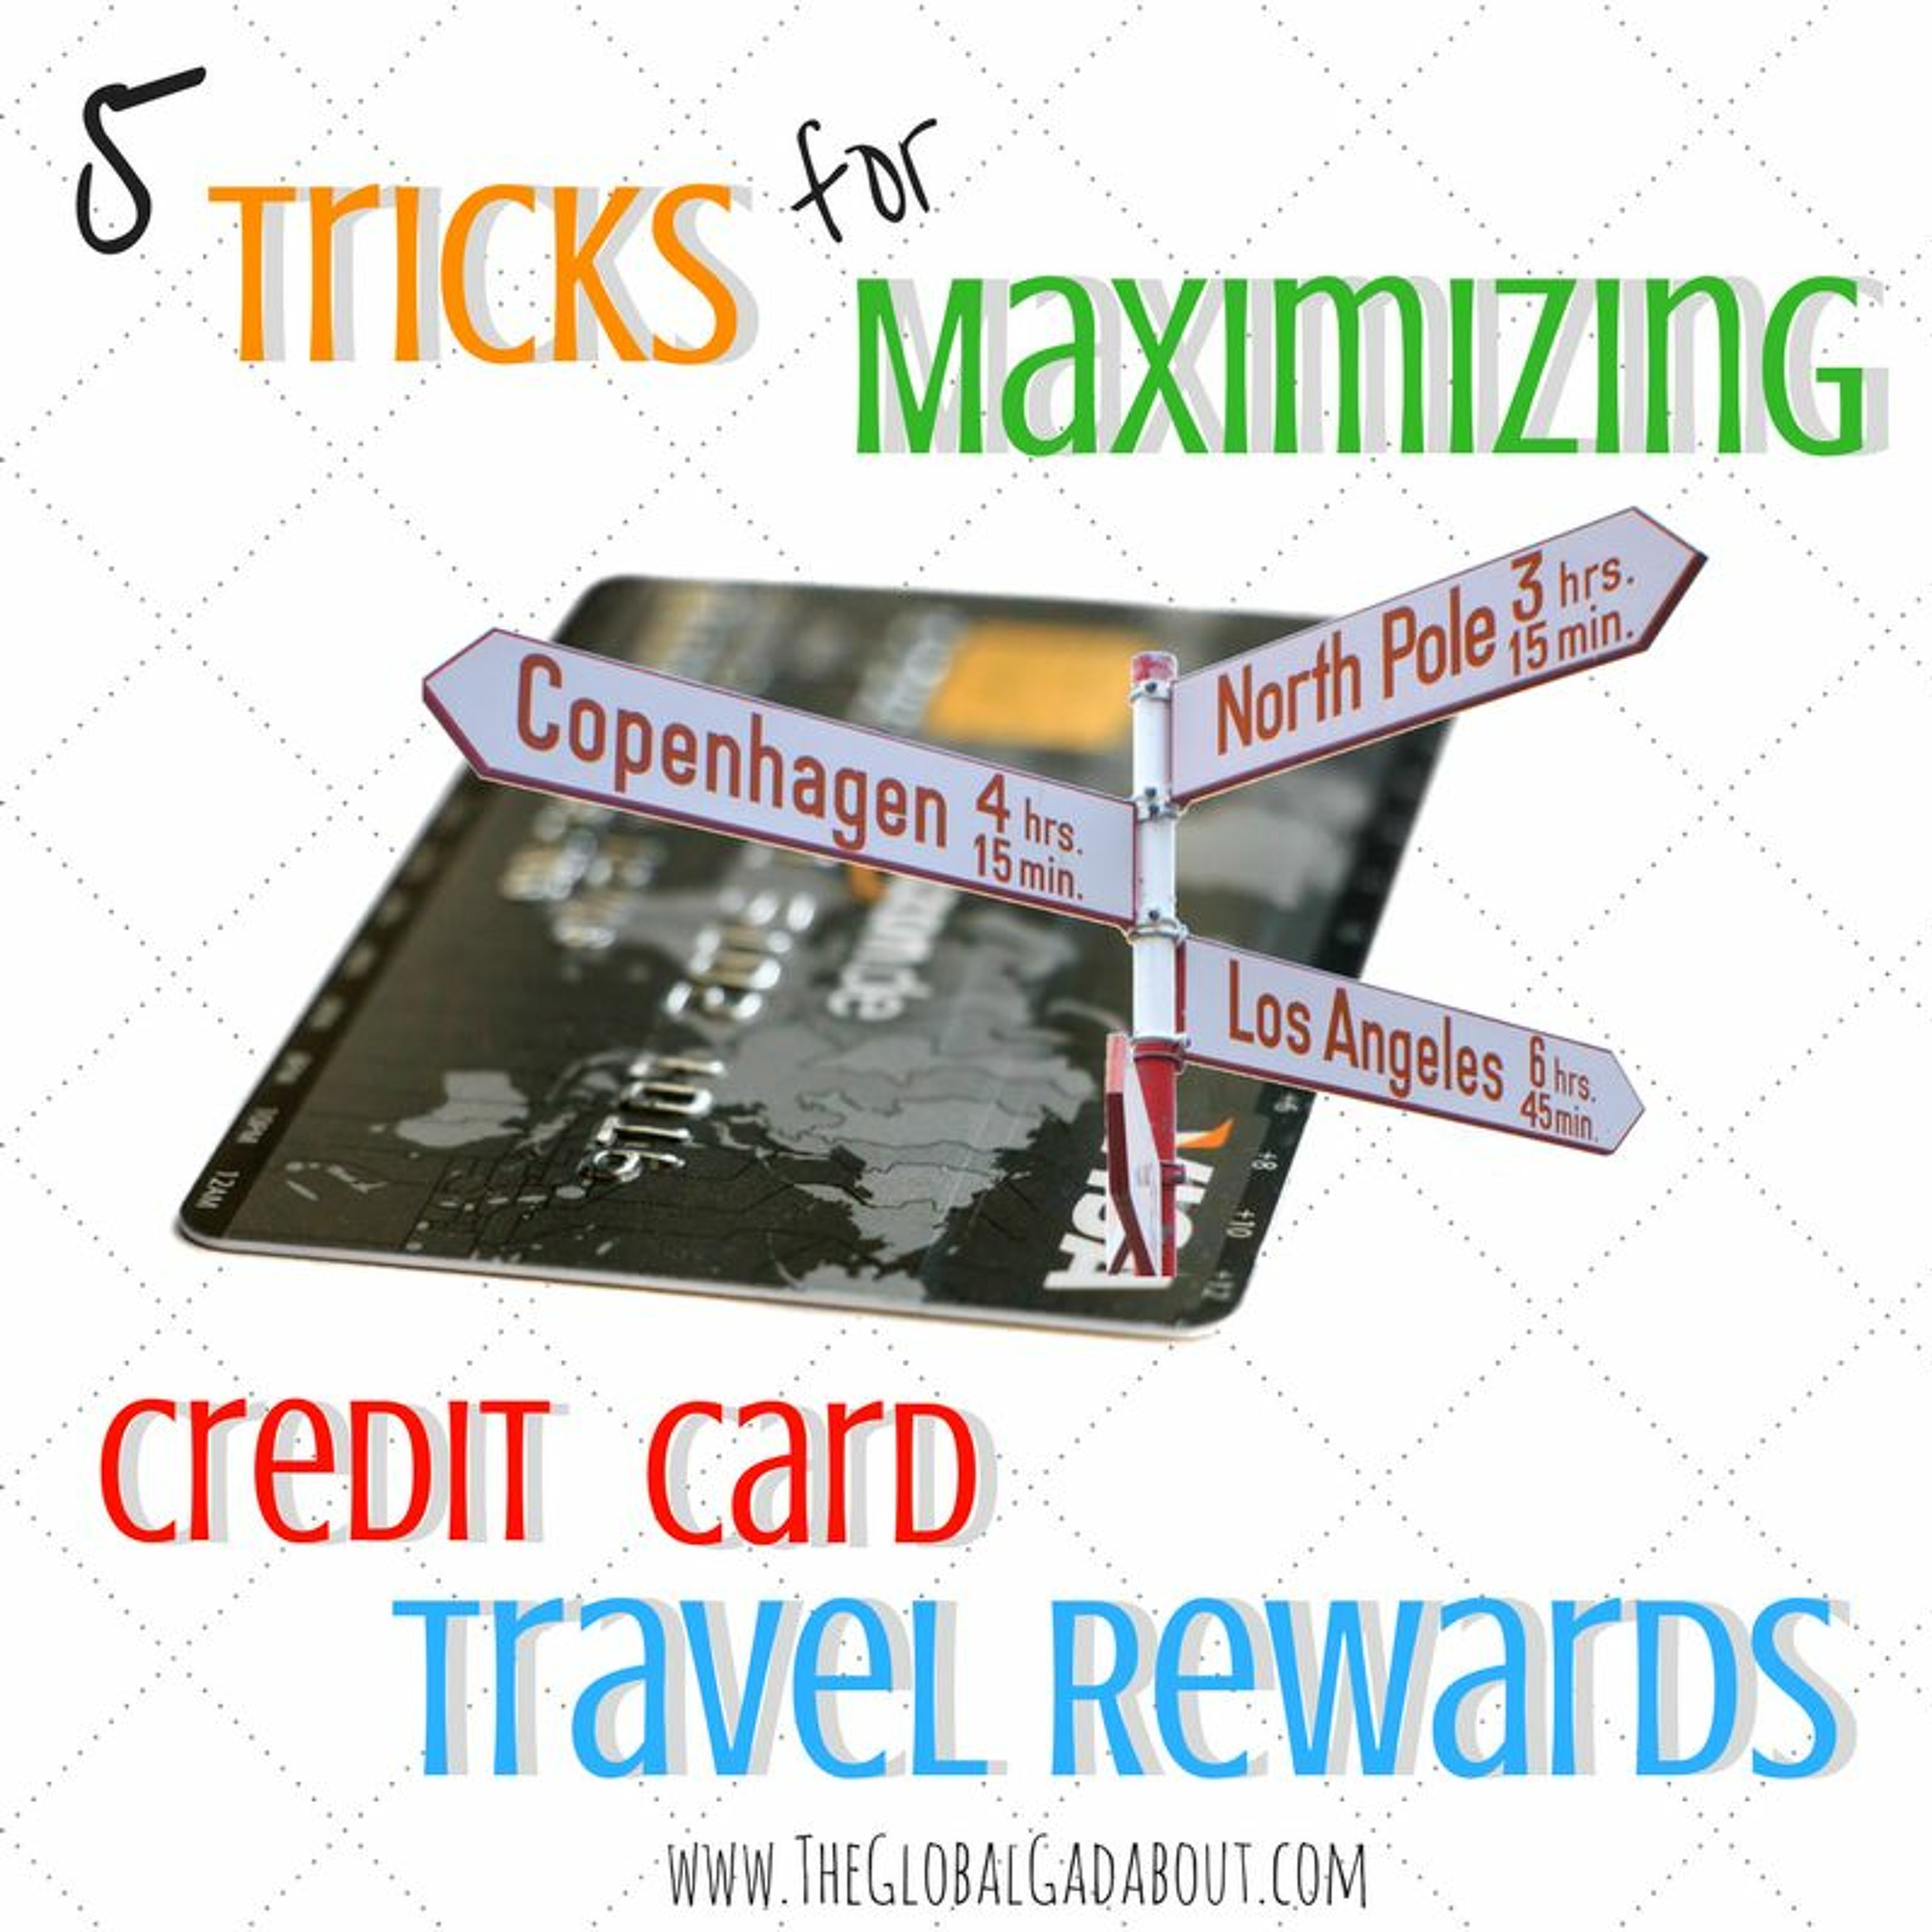 5 Tricks to Maximize Credit Card Travel Rewards